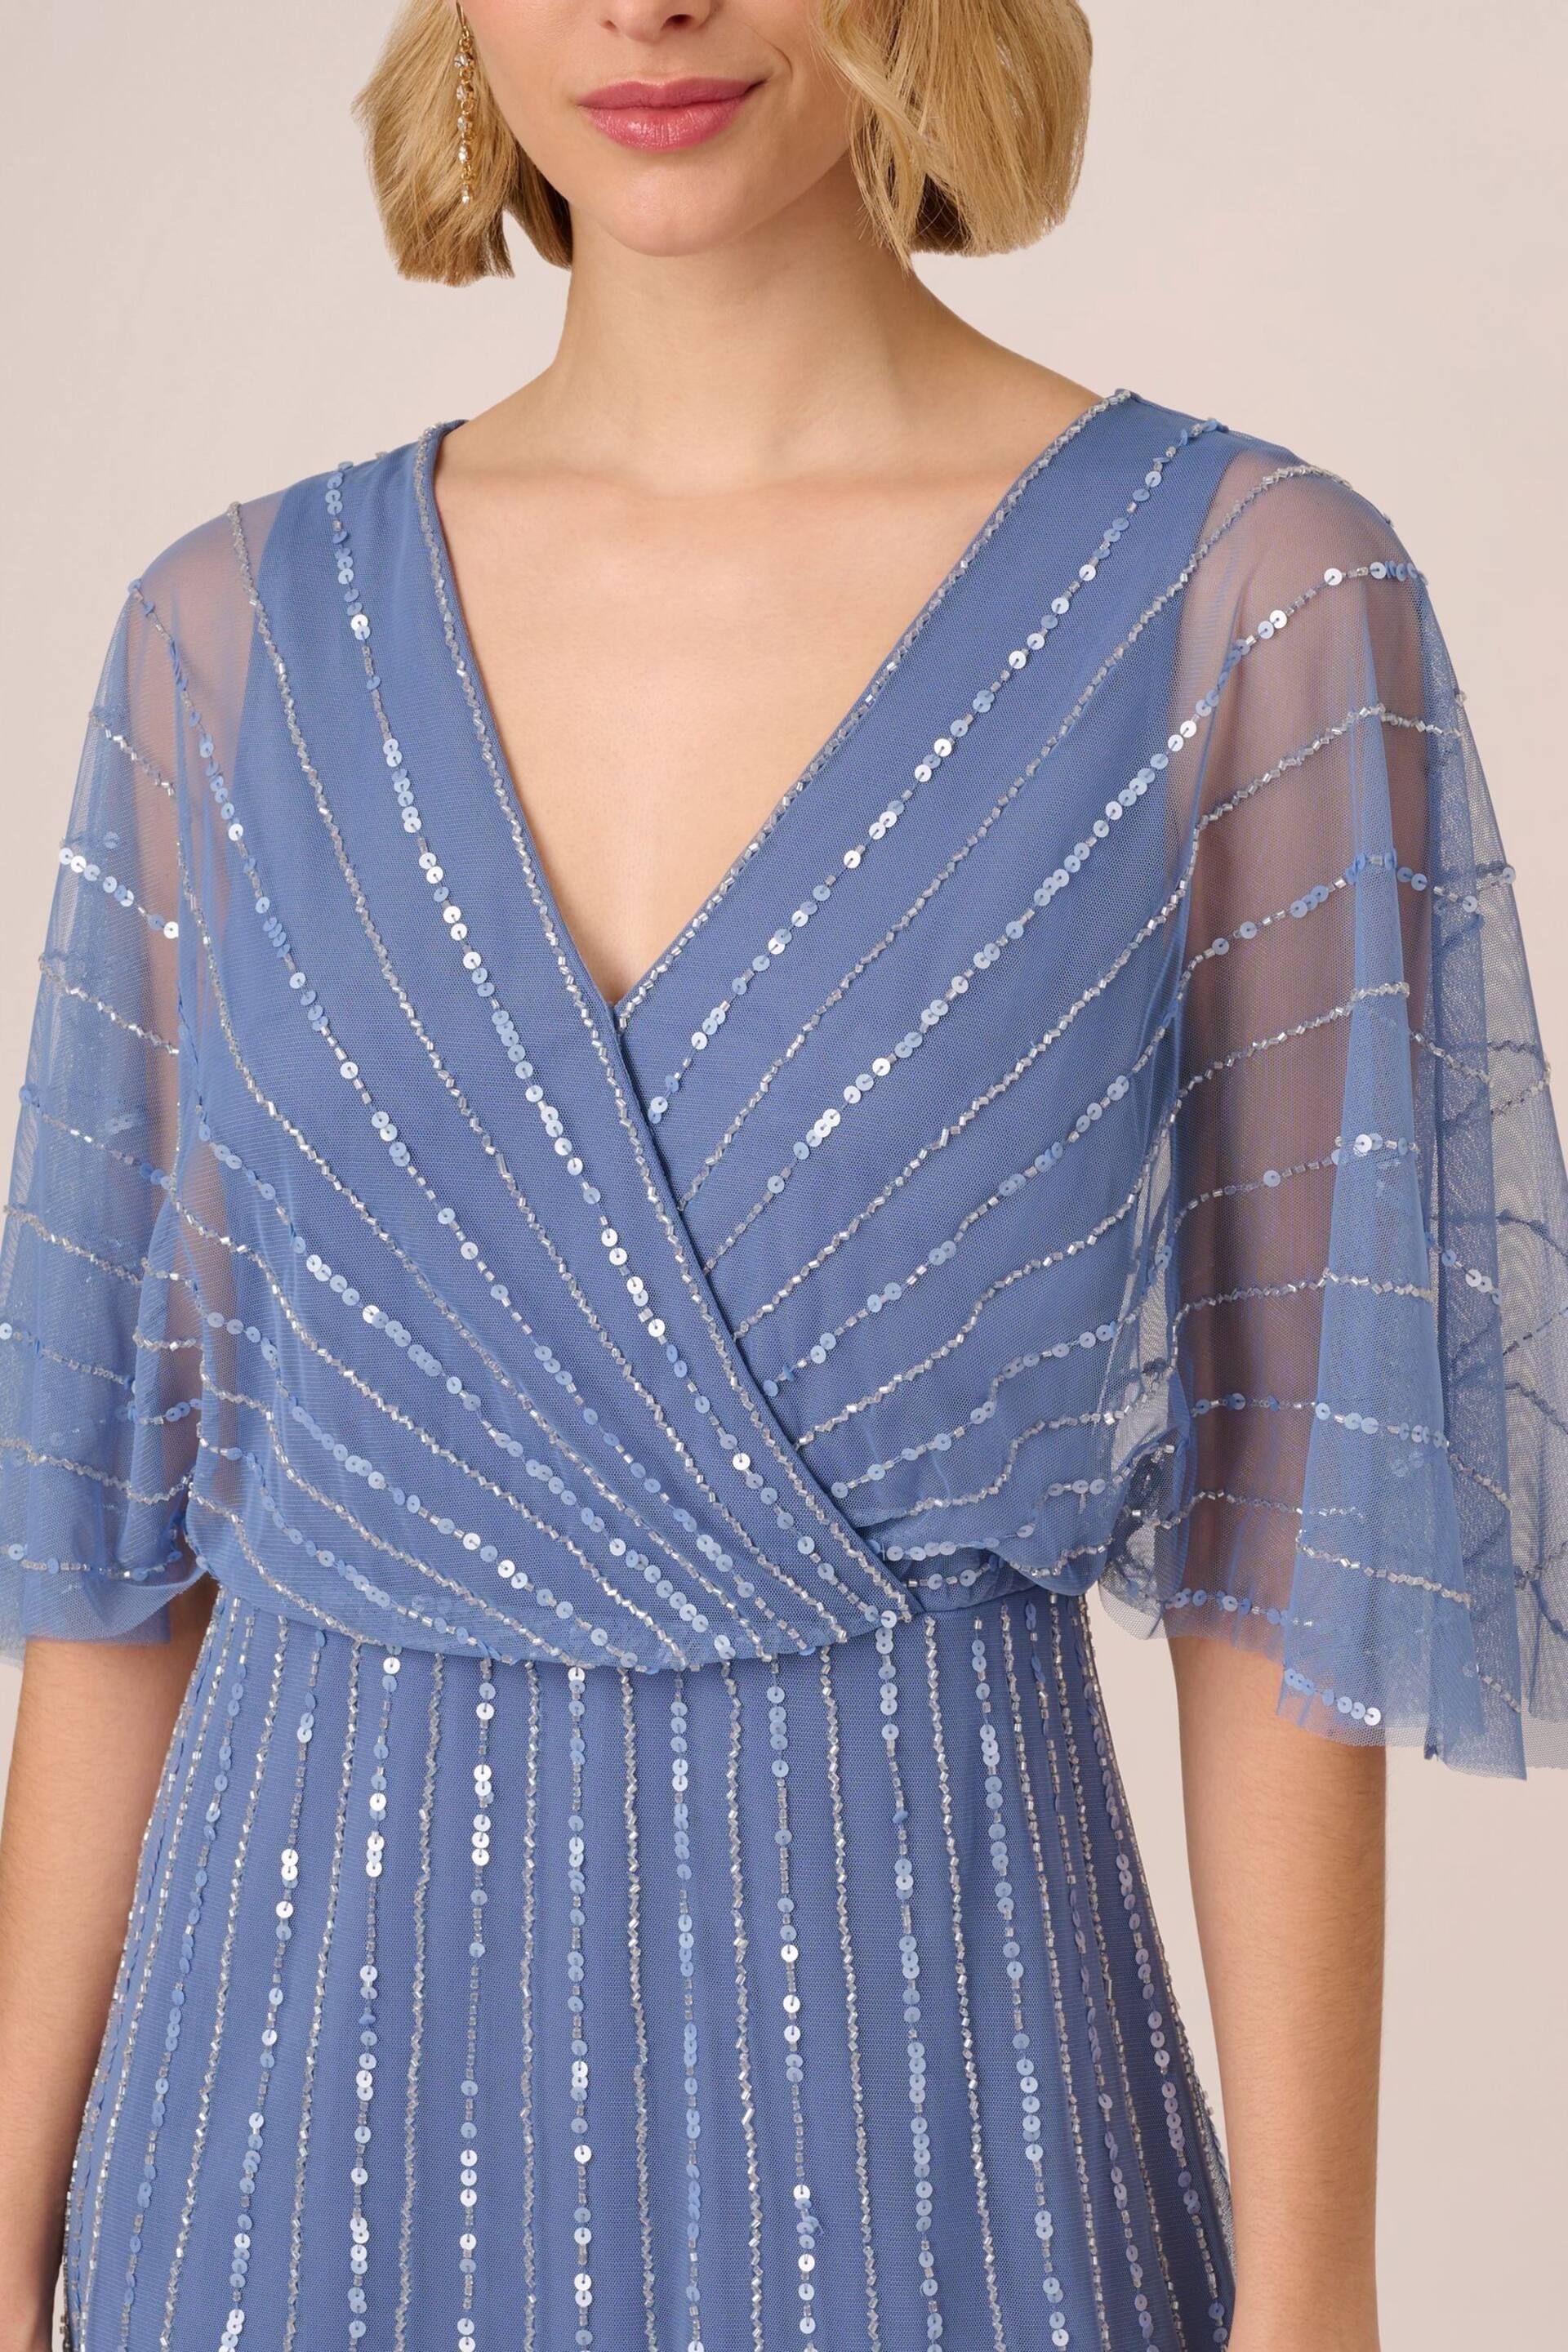 Adrianna Papell Blue Beaded Short Dress - Image 4 of 7